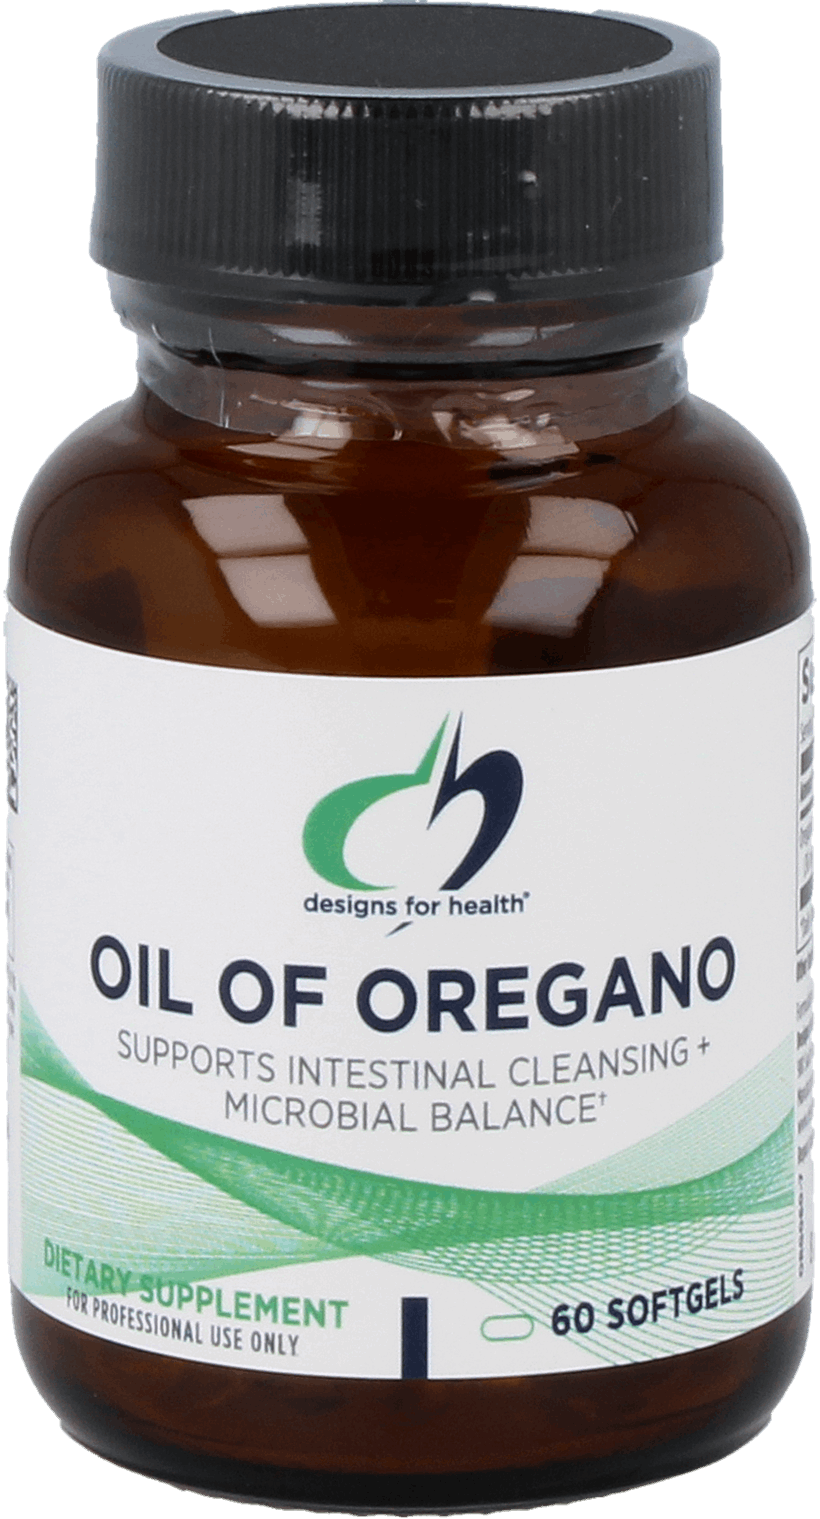 Oil of Oregano (Oregano olie)